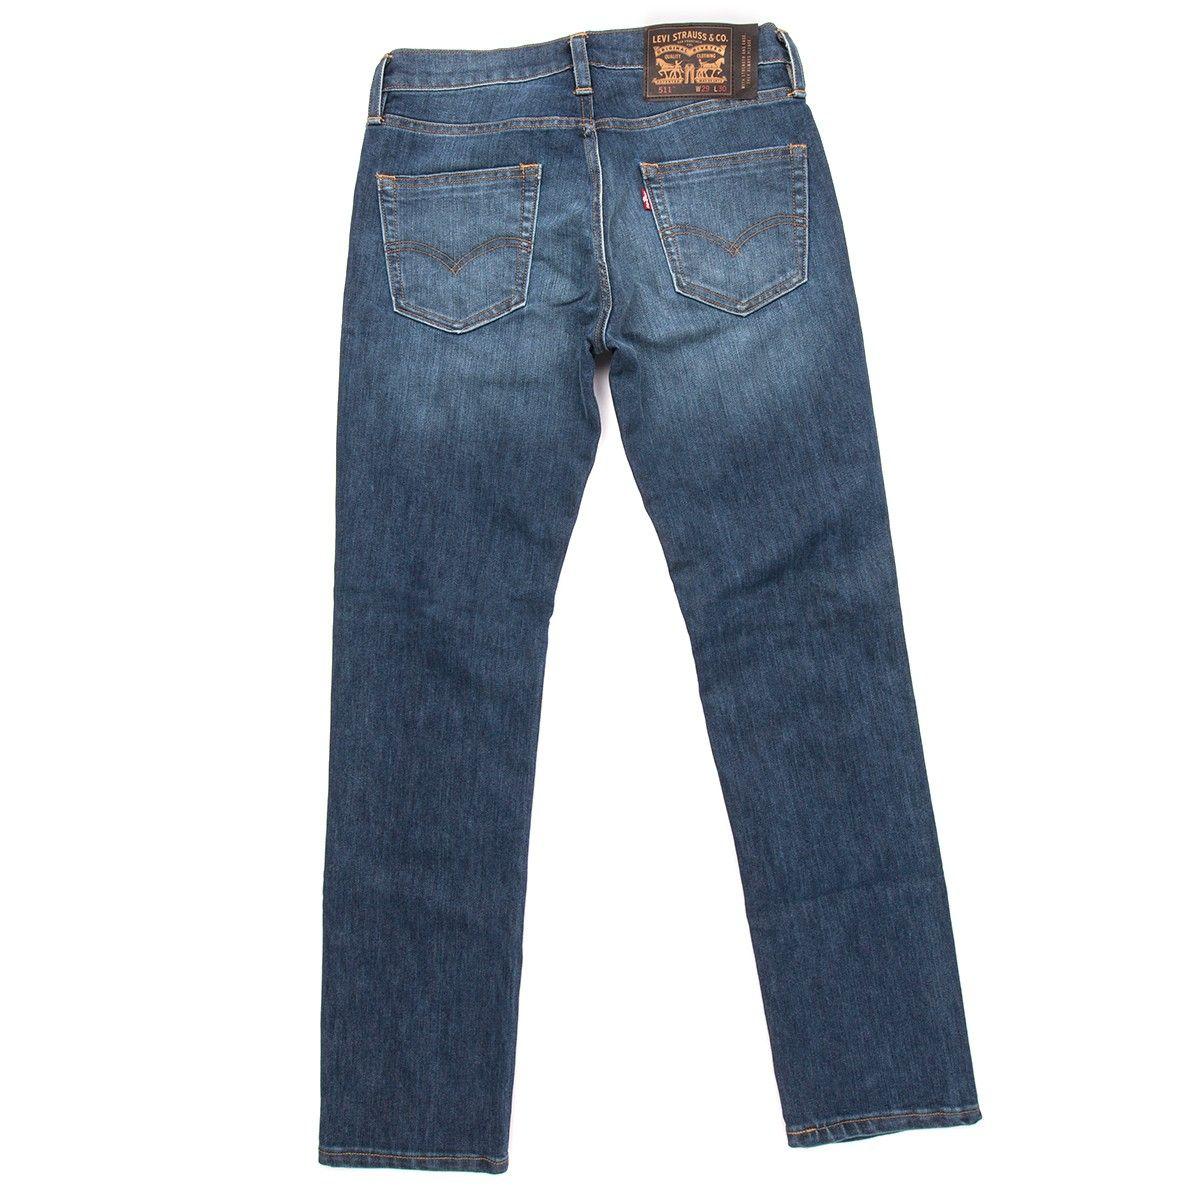 Express Jeans Logo - Levi's Skate 511 Slim 5 Pocket SE Jeans - Midnight Blue